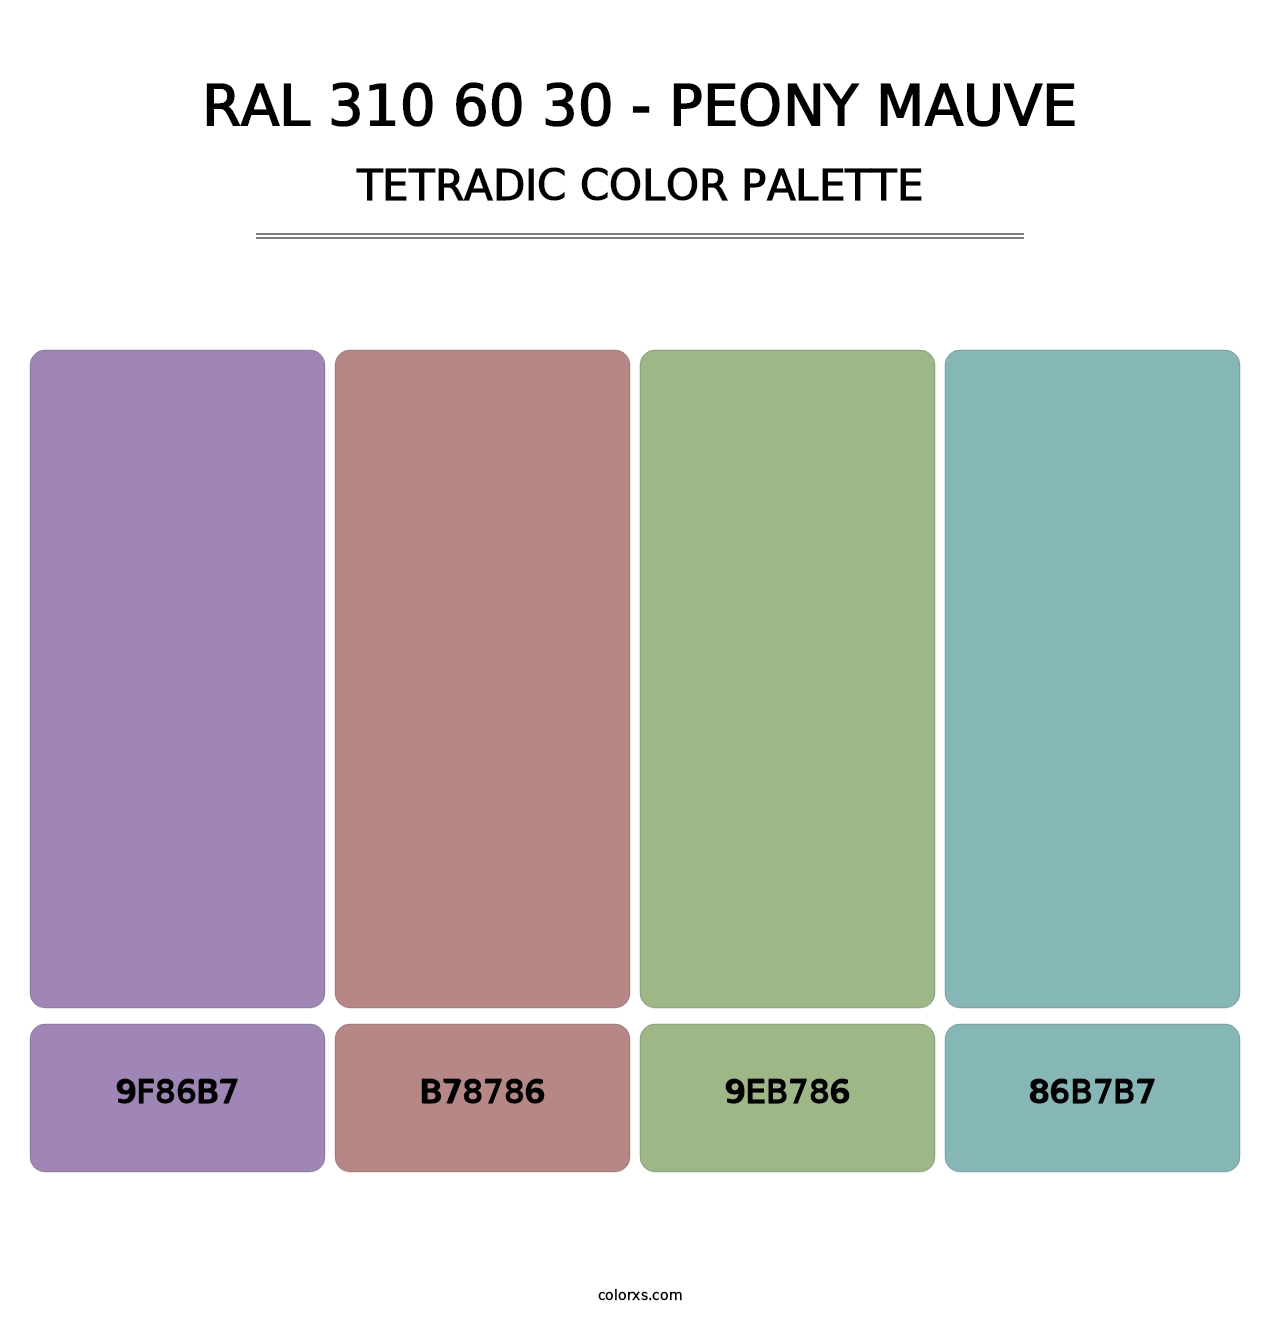 RAL 310 60 30 - Peony Mauve - Tetradic Color Palette